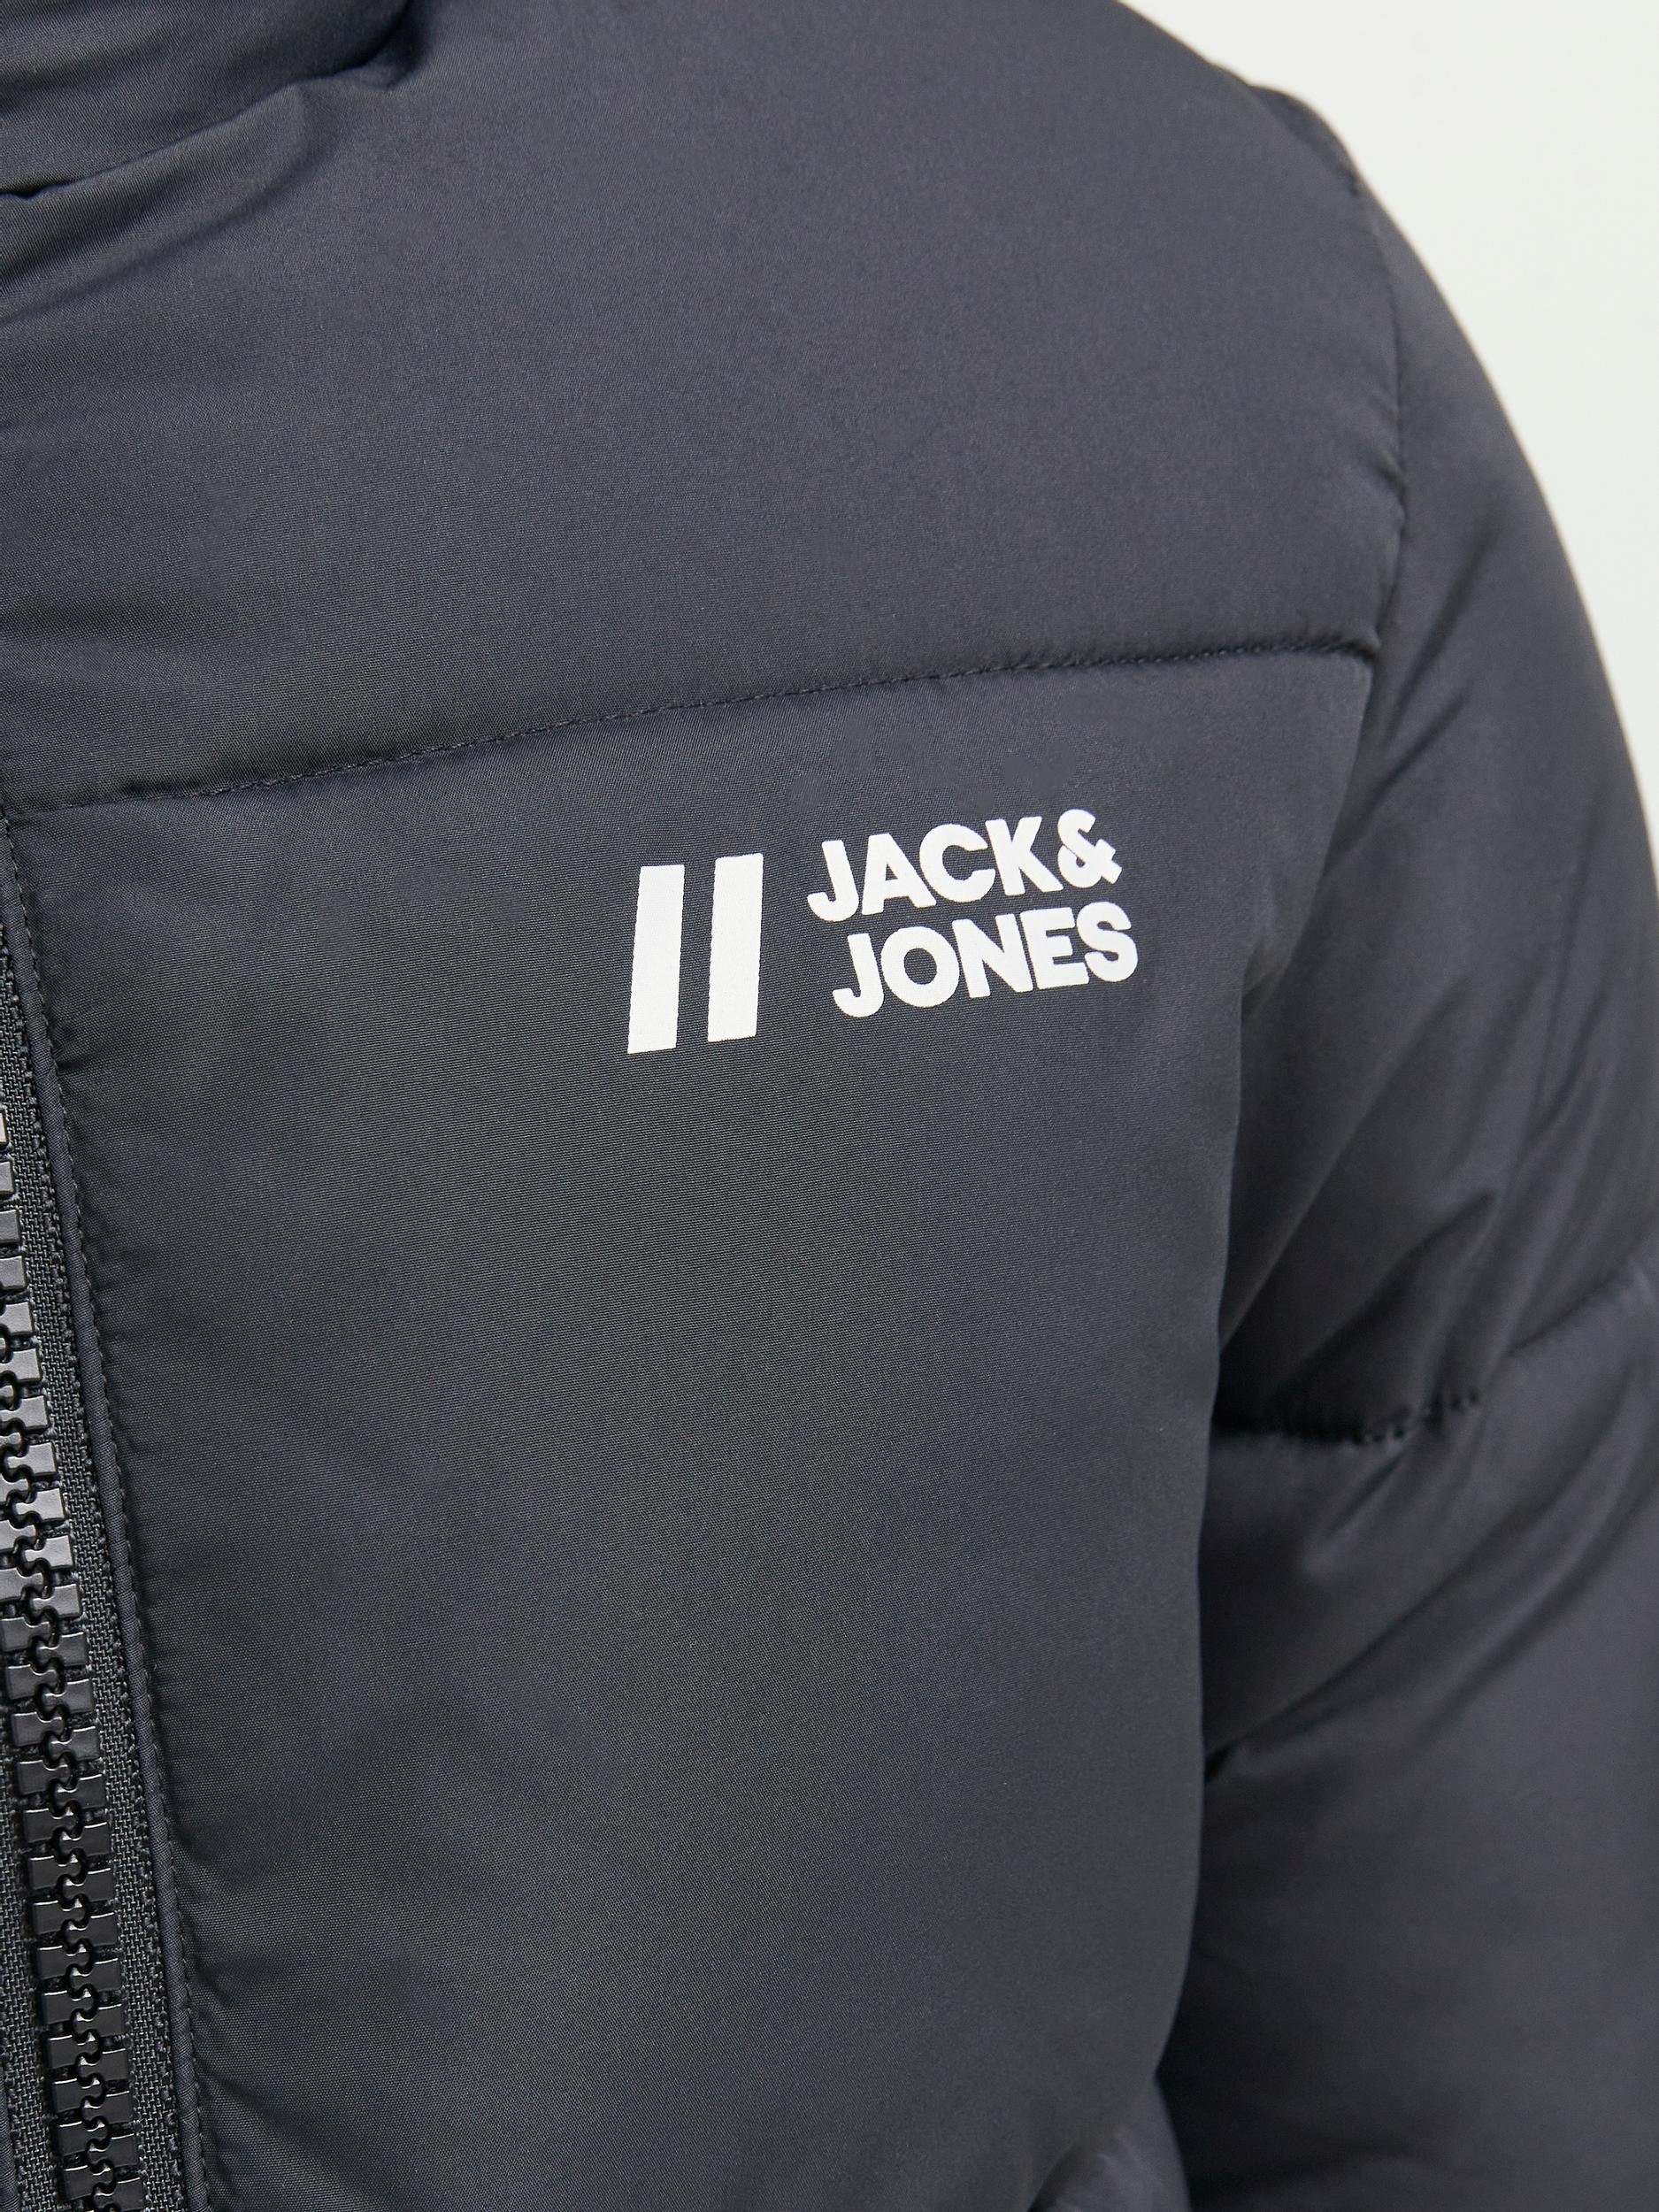 & Jones Black Junior Jack Steppjacke